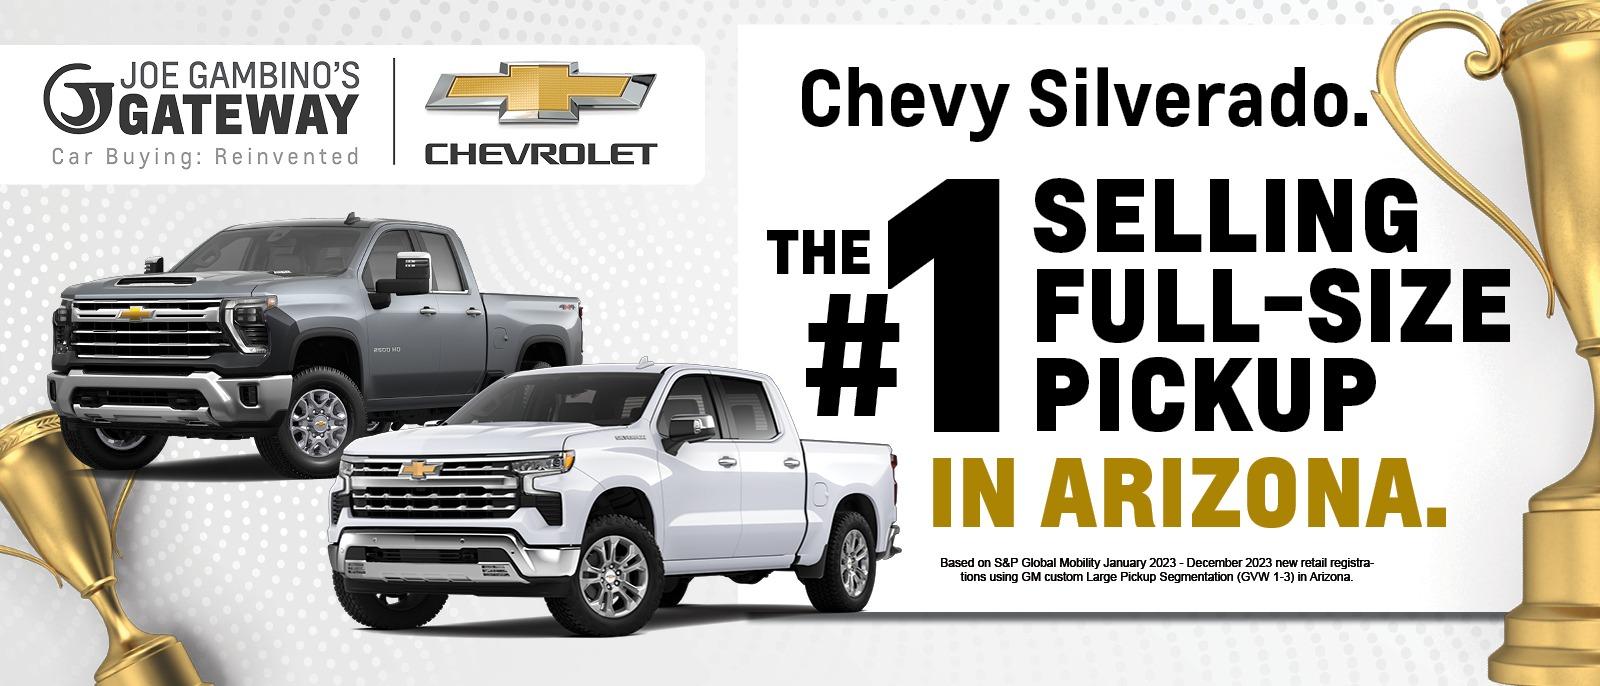 Chevy Silverado
The #1 Selling Full-Size Pickup in Arizona